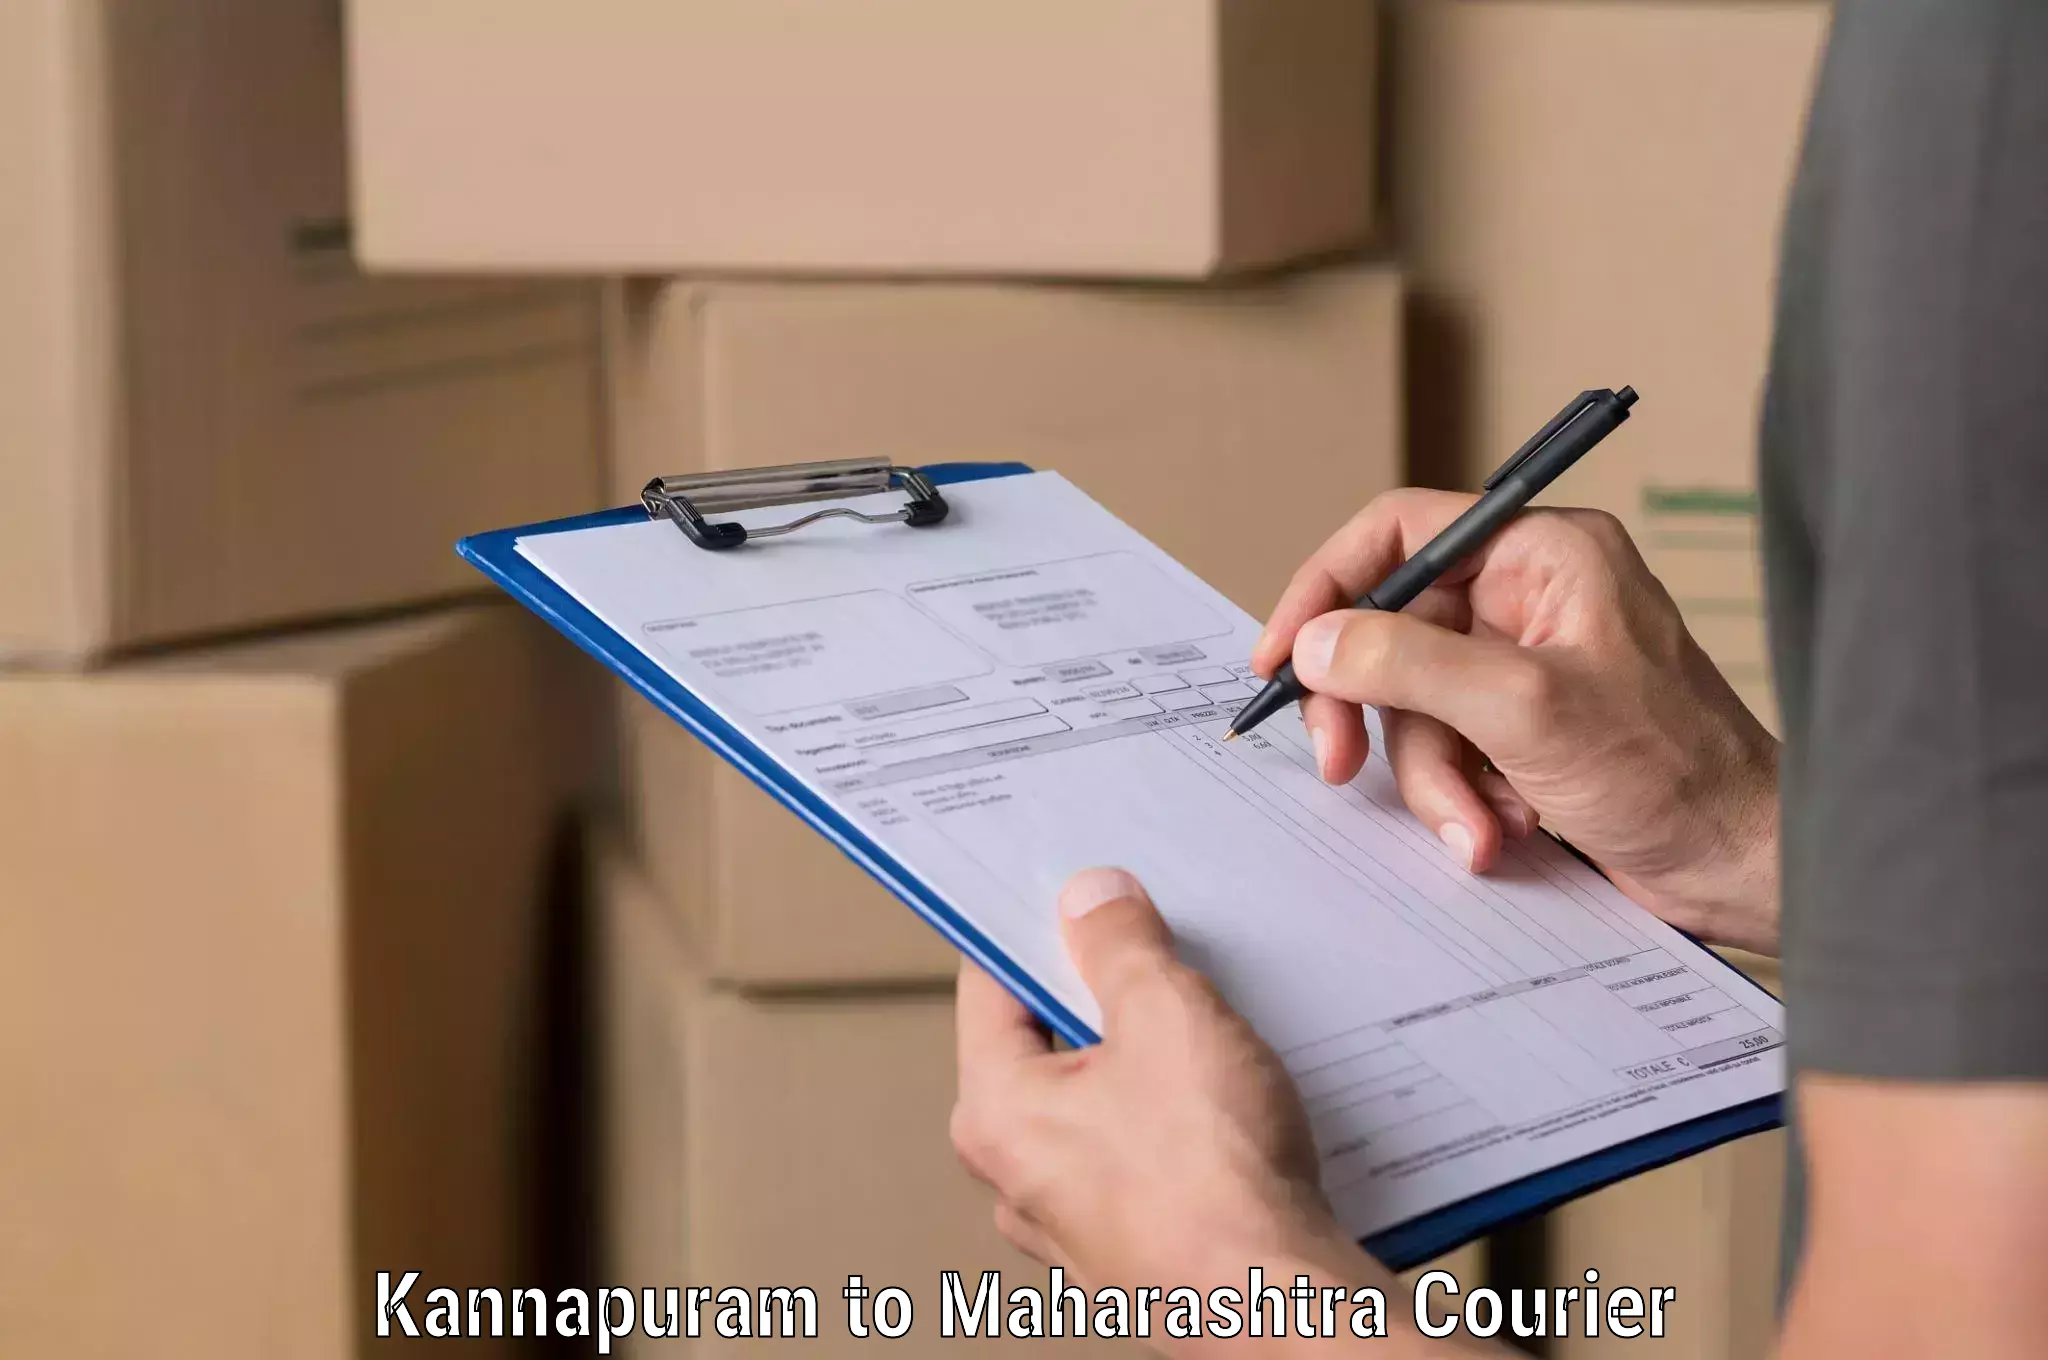 Secure shipping methods Kannapuram to Bhandara